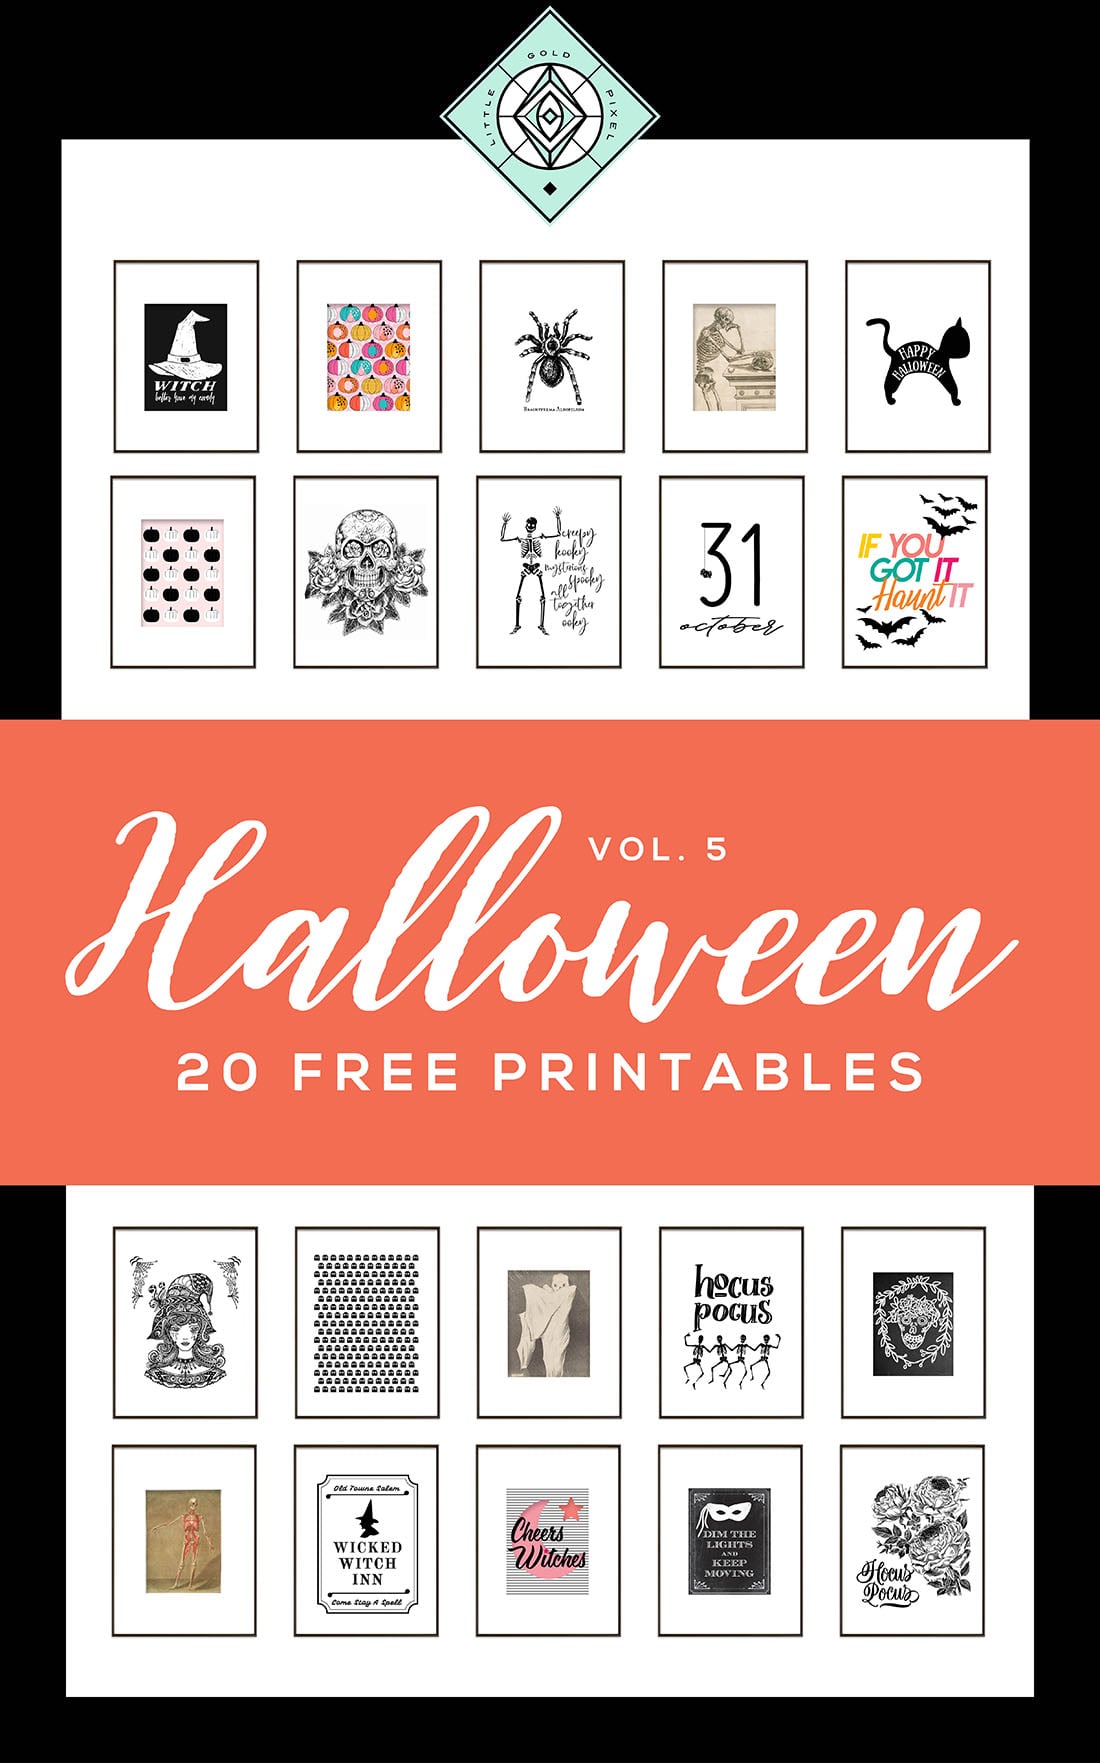 Free Halloween Printables: Vol. 5